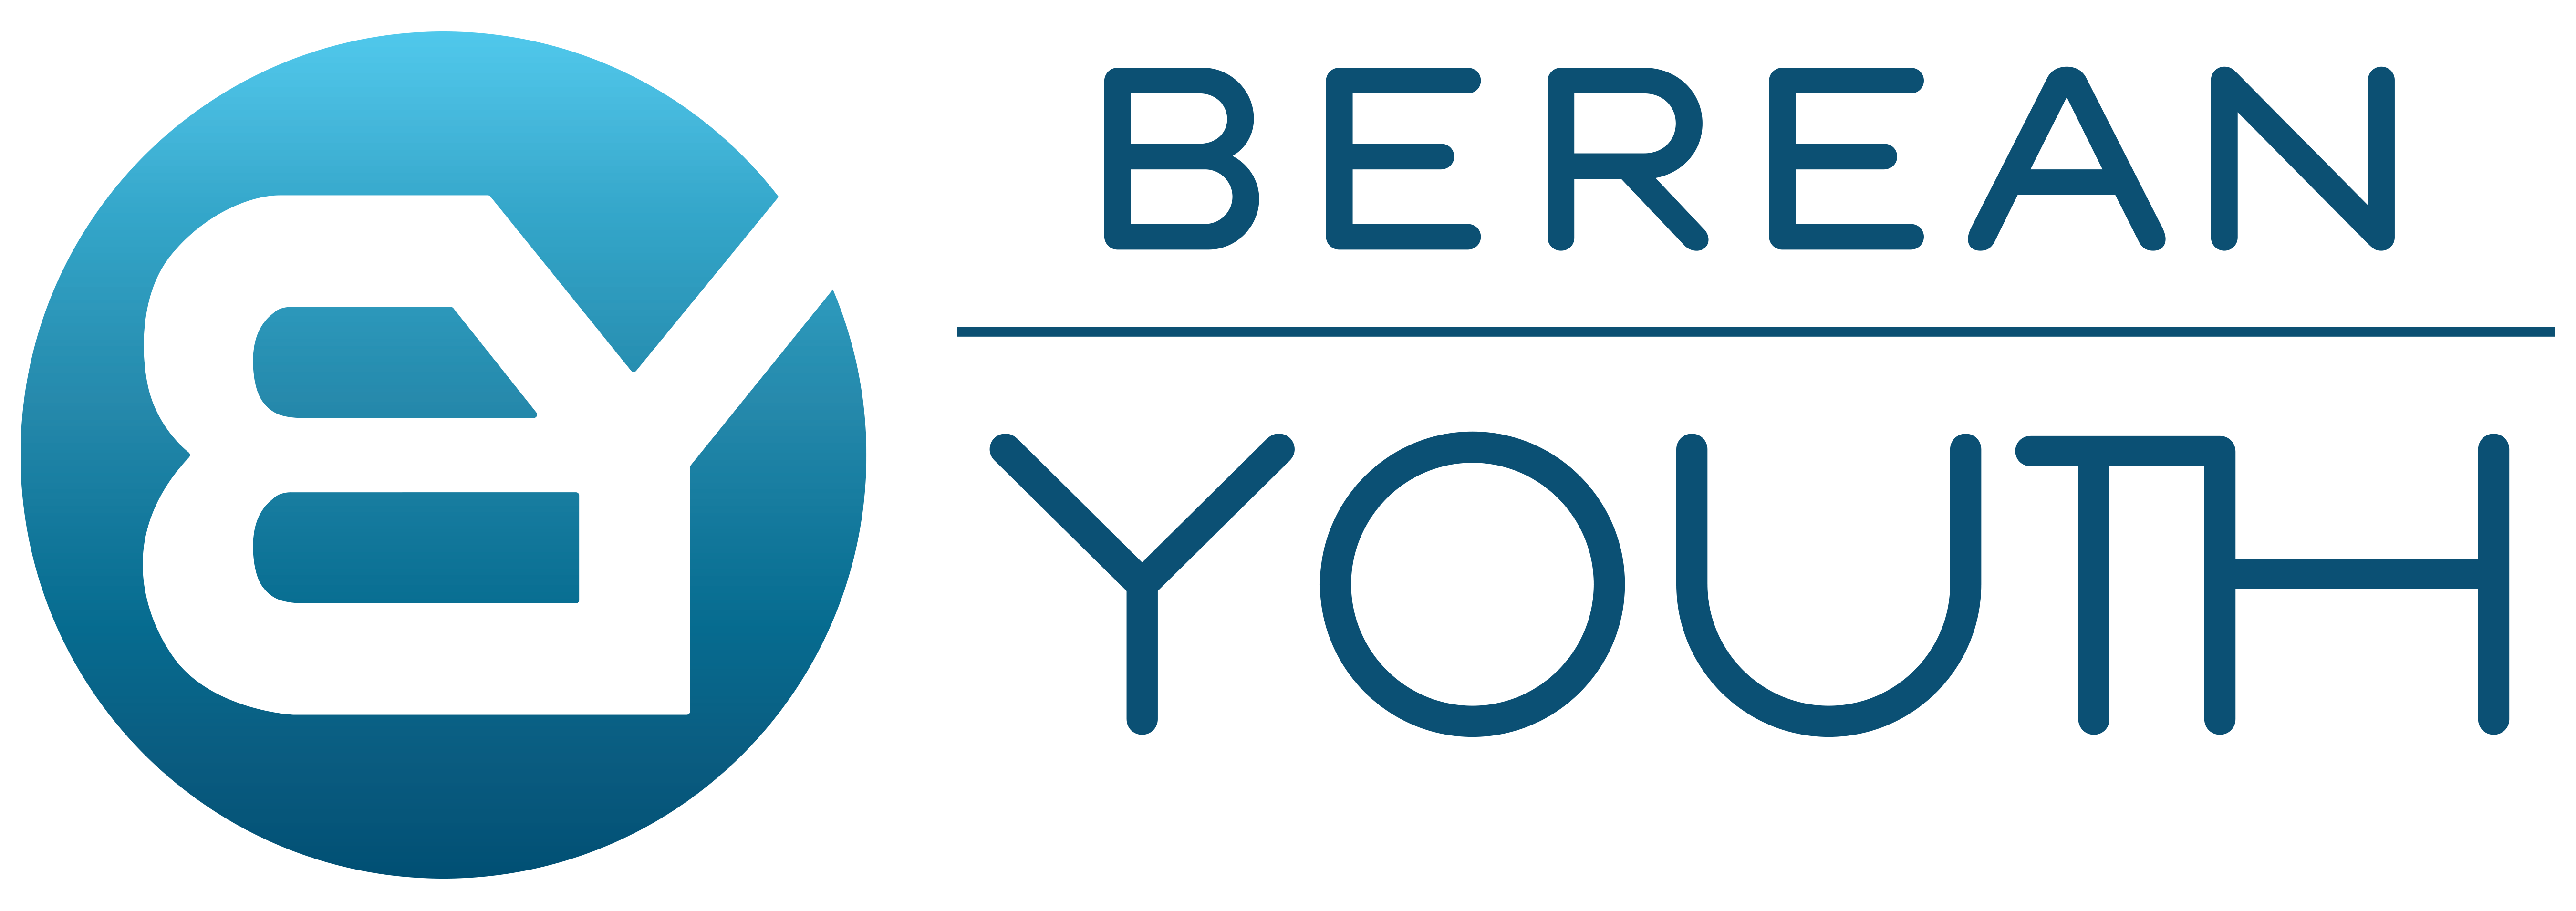 Berean-youth-logo